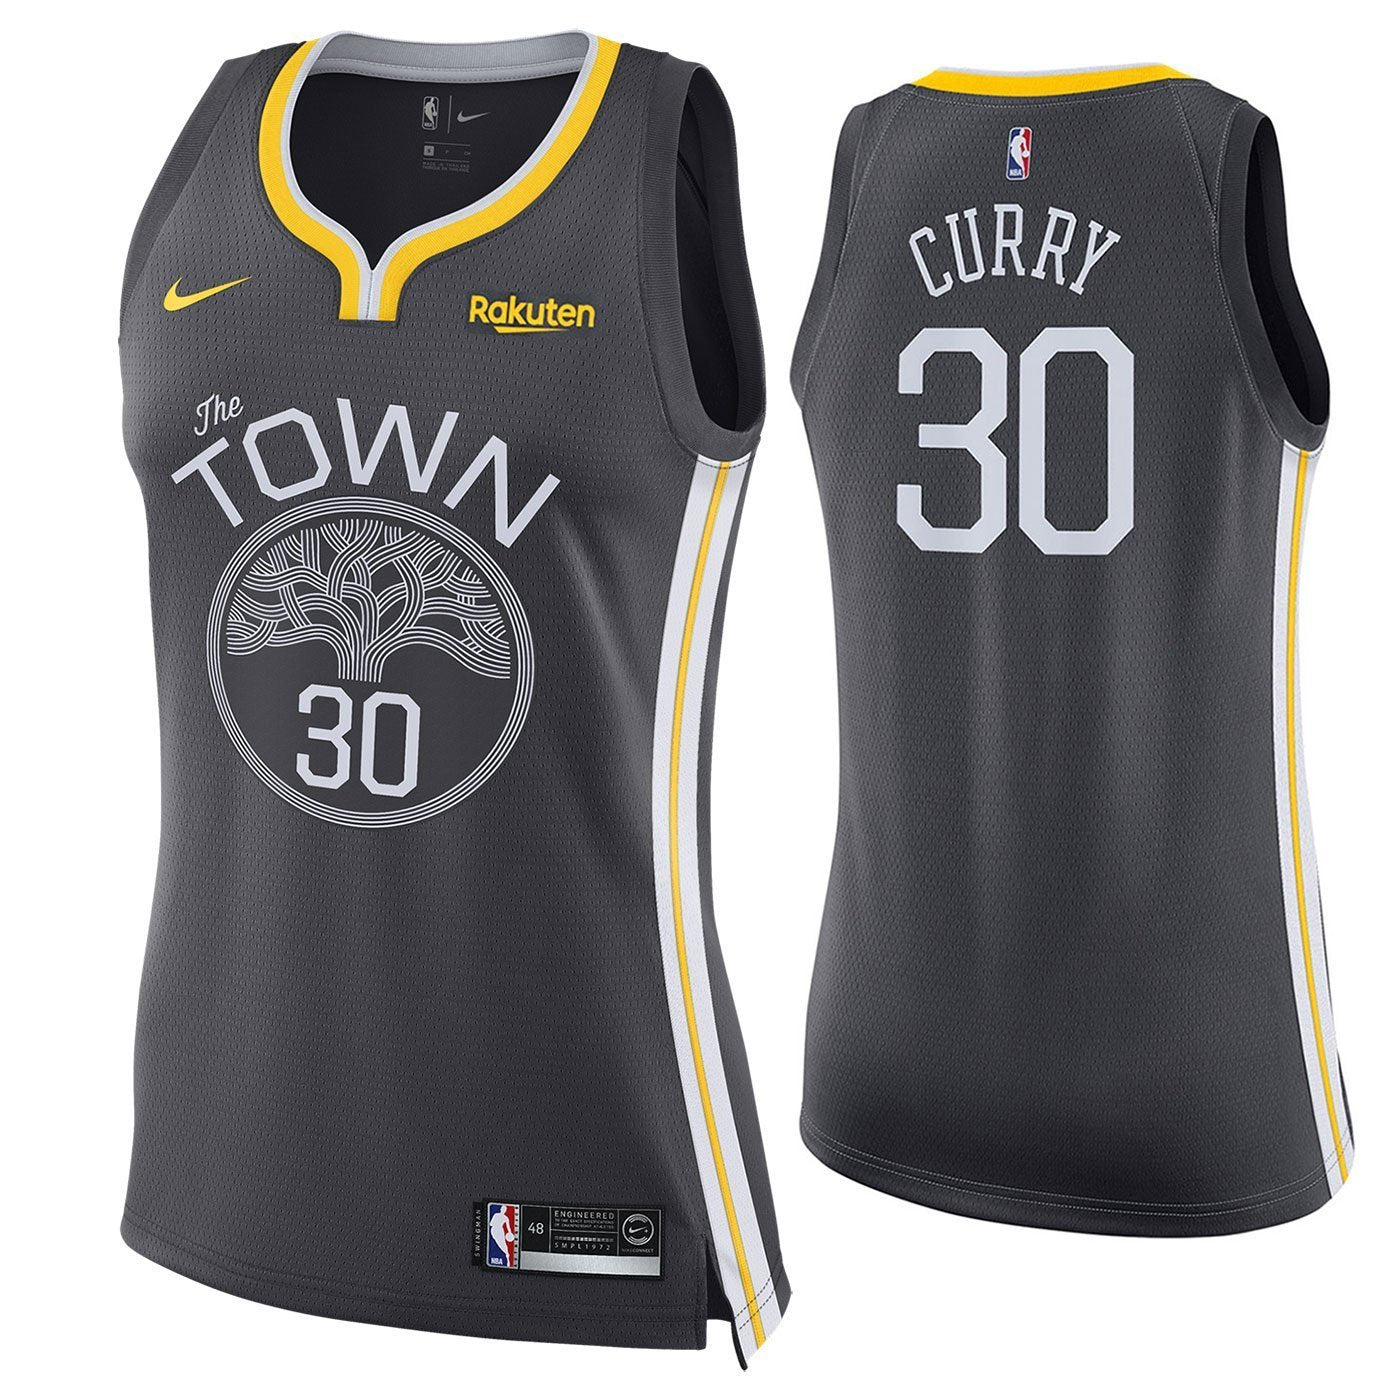 30 - Women's Stephen Curry Golden State Warriors Swingman Jersey